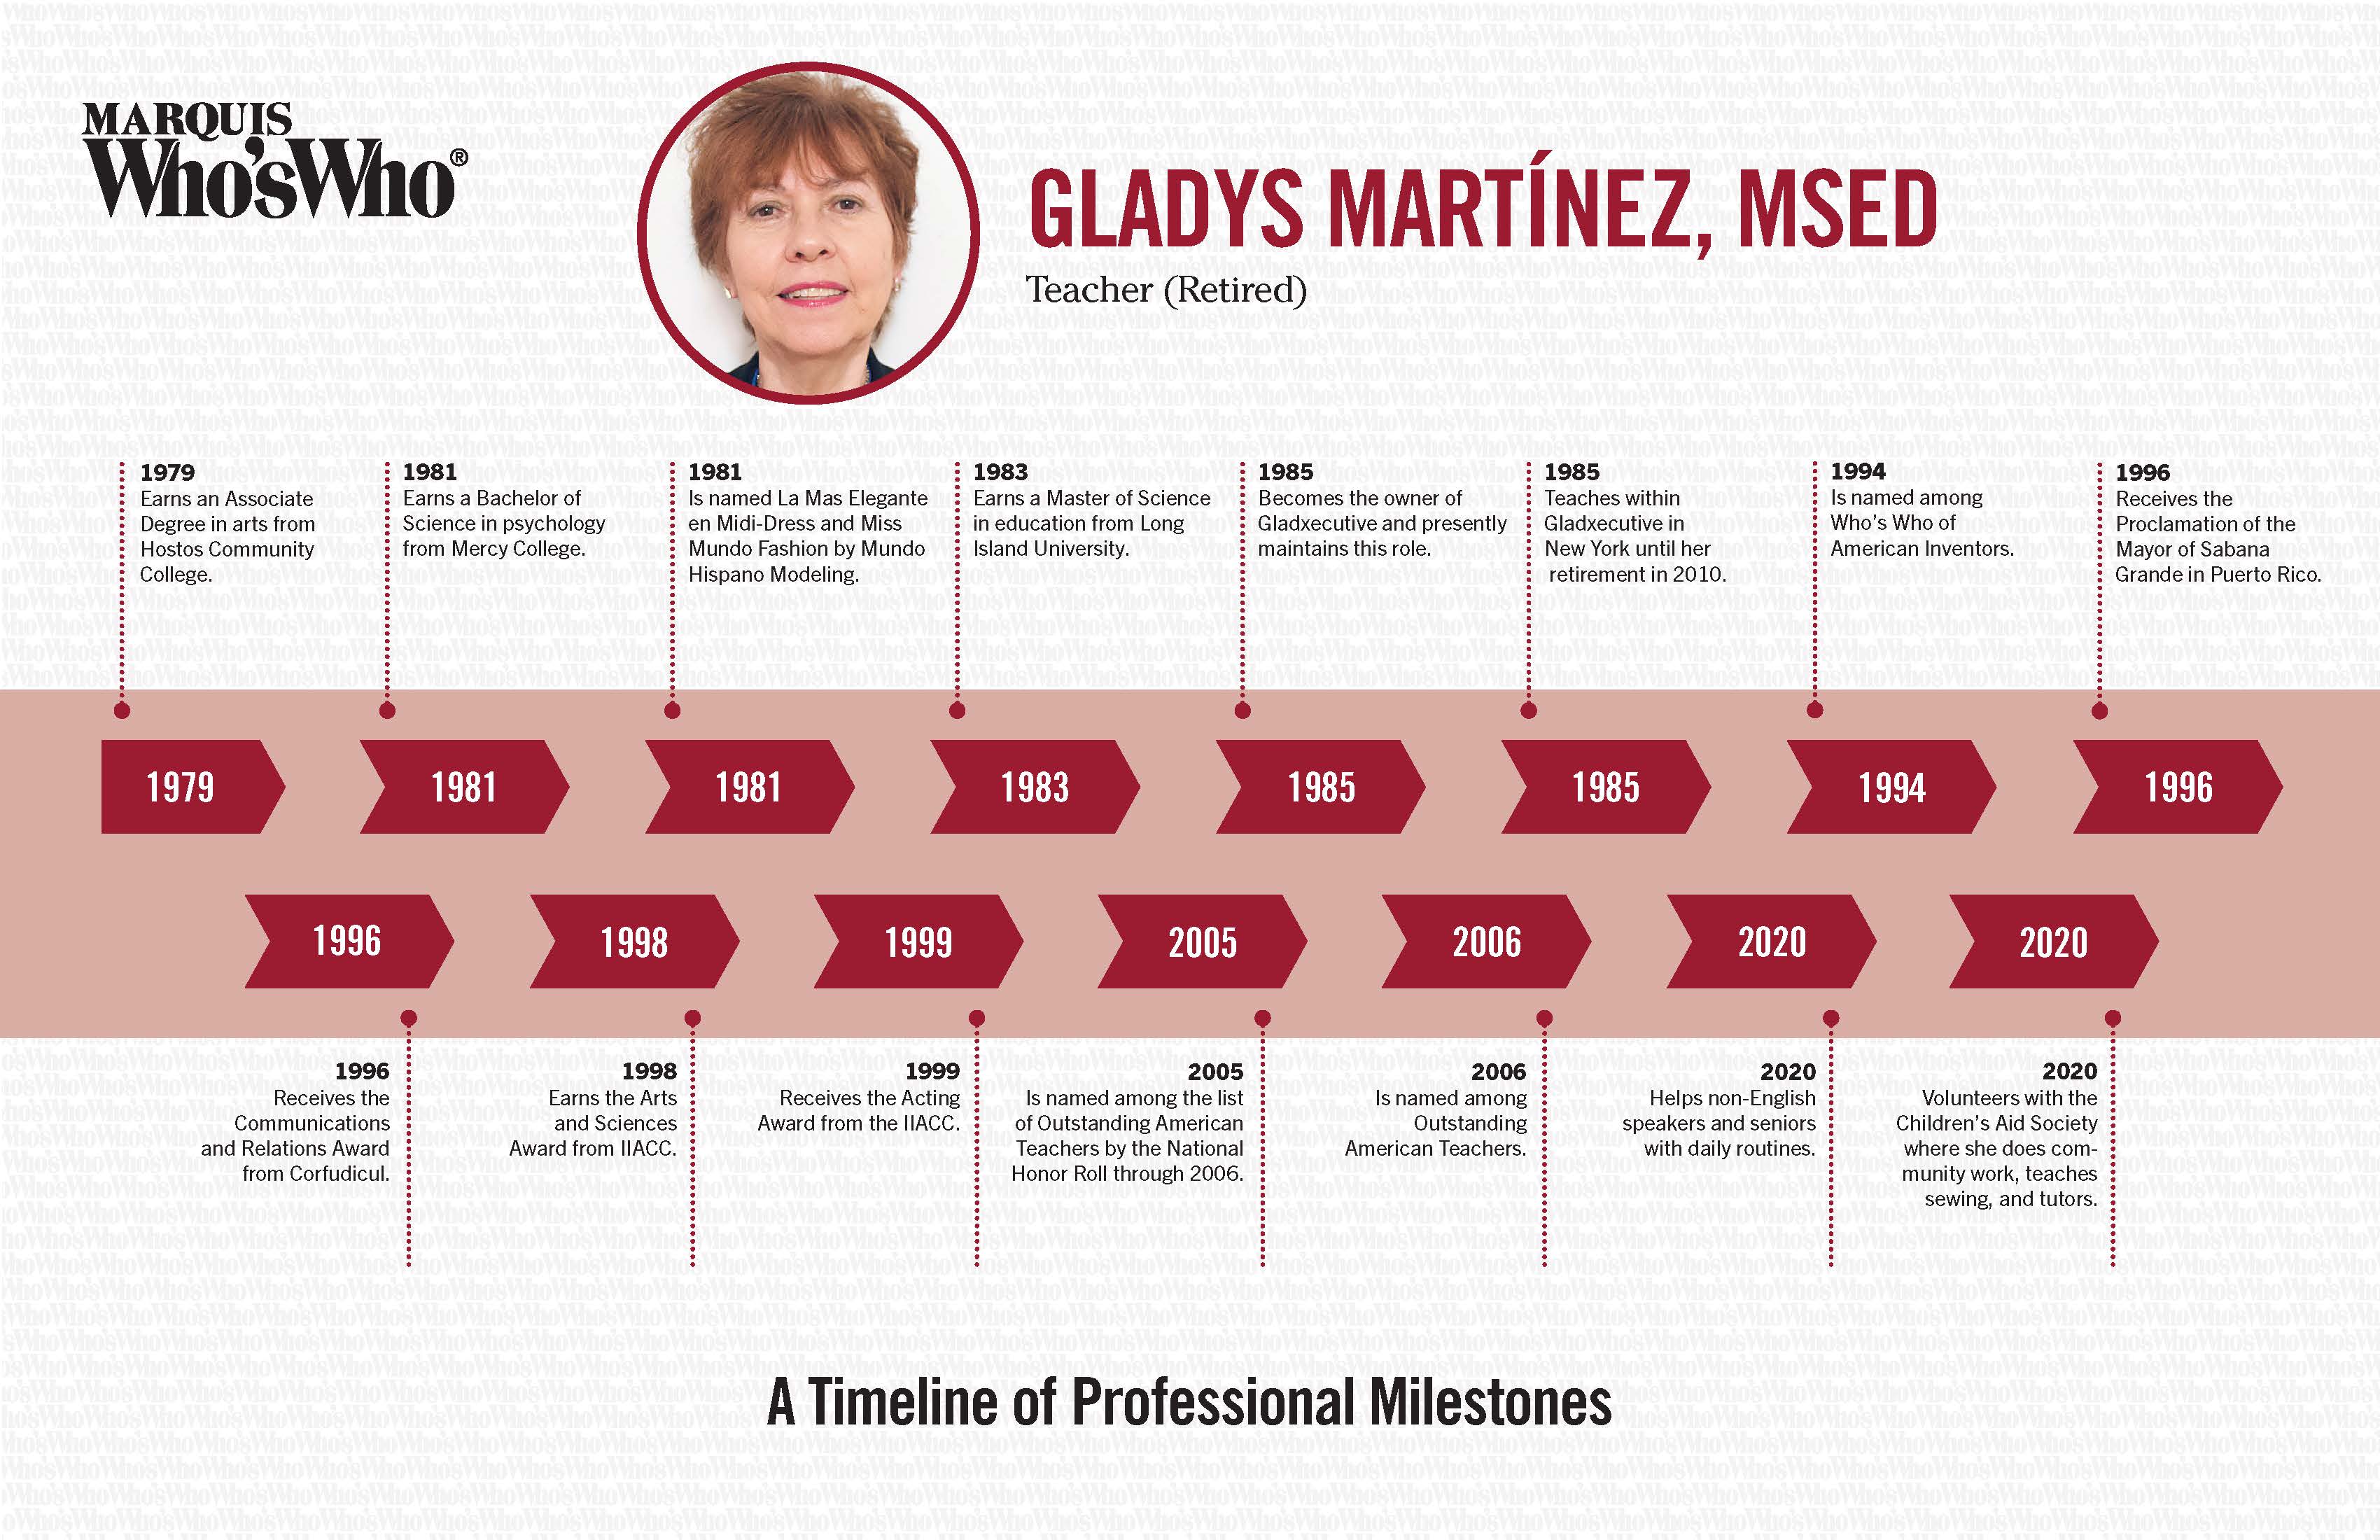 Gladys Martínez